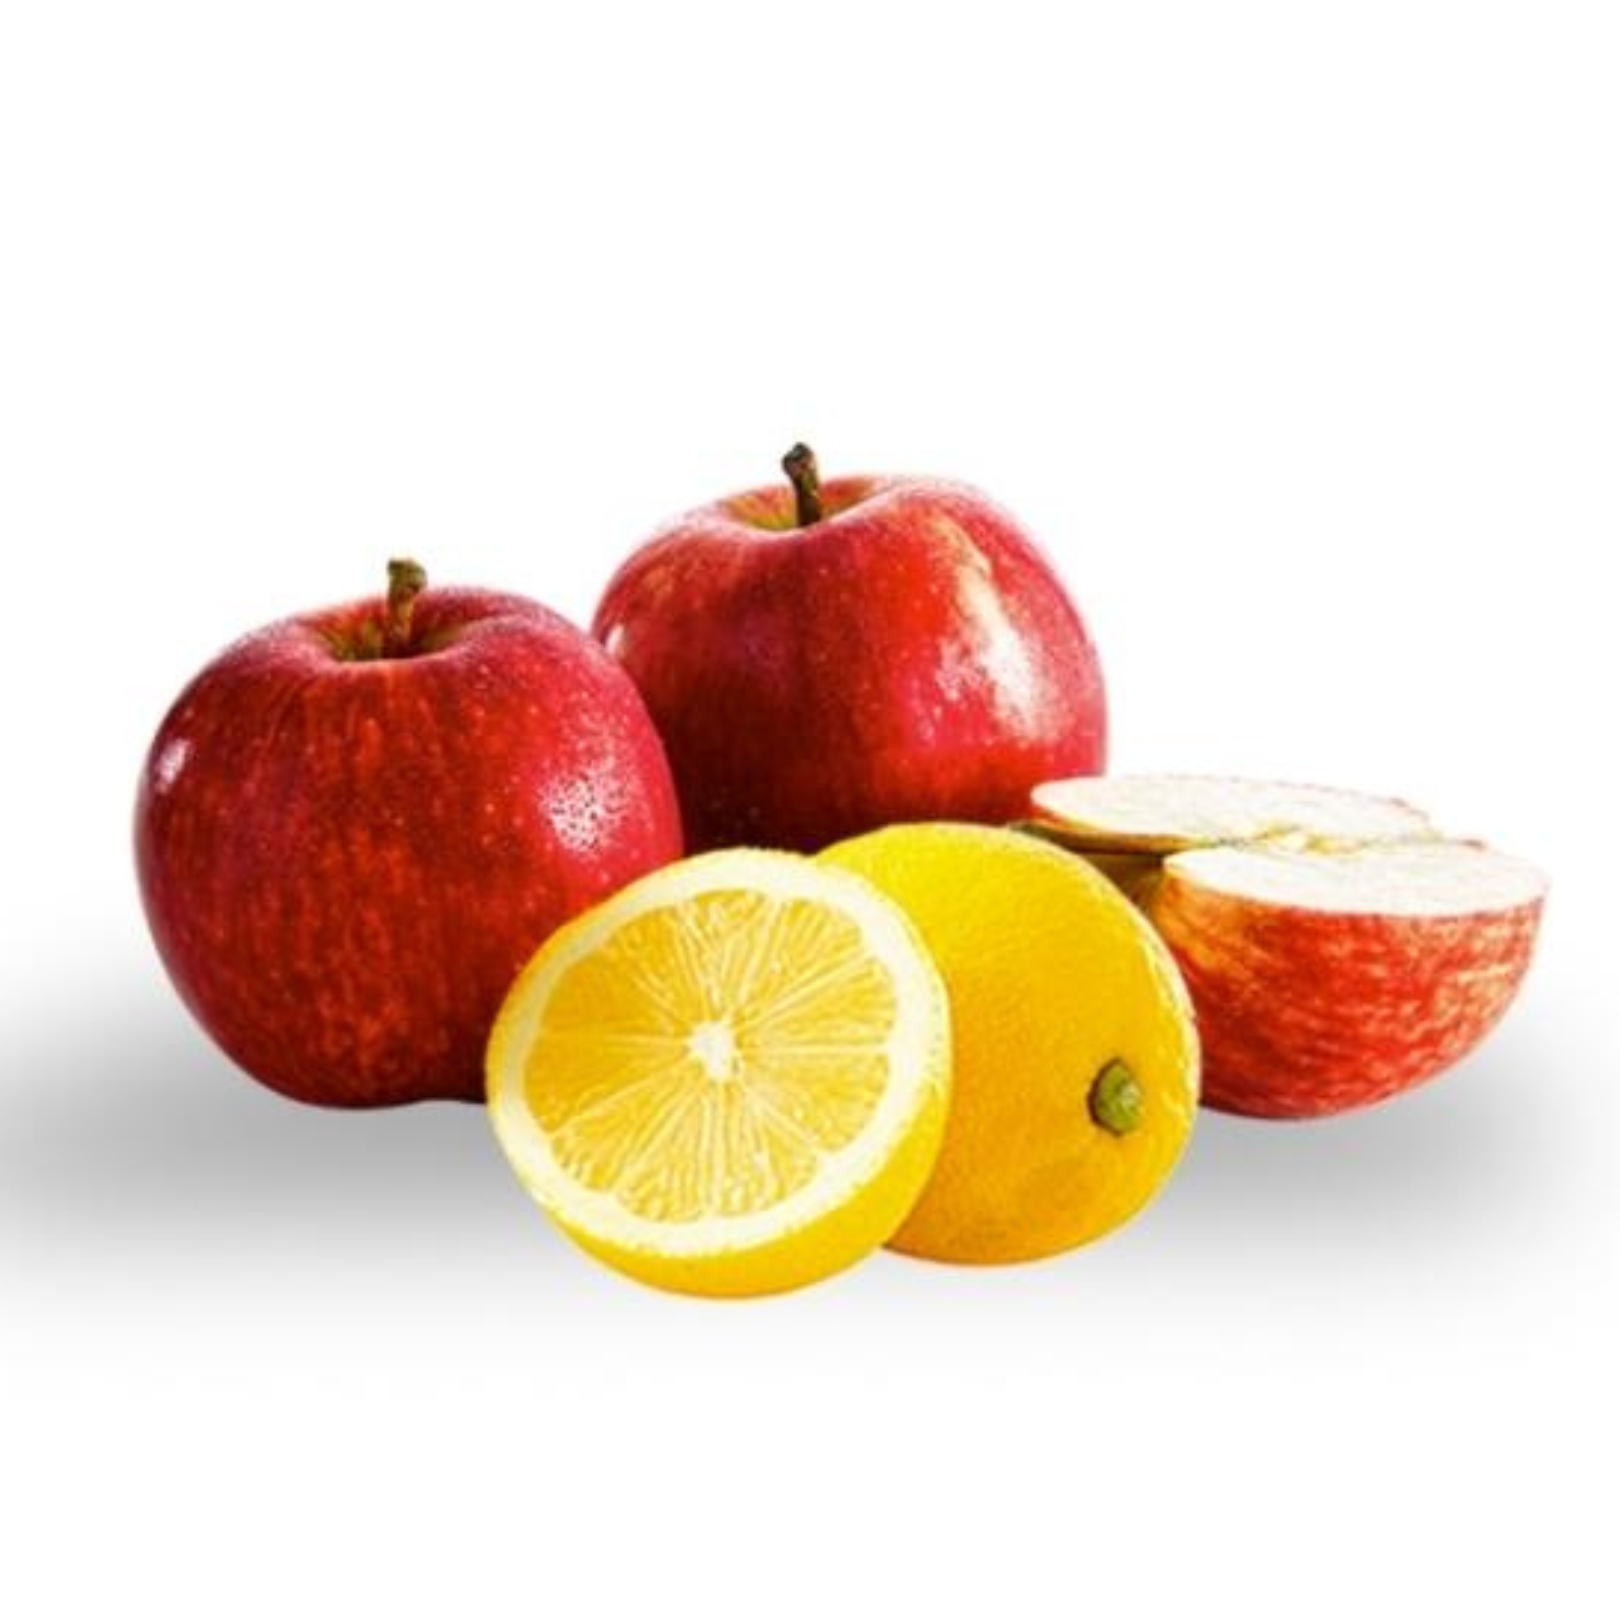 Buy Apple Lemon Online NZ - Twisted Citrus